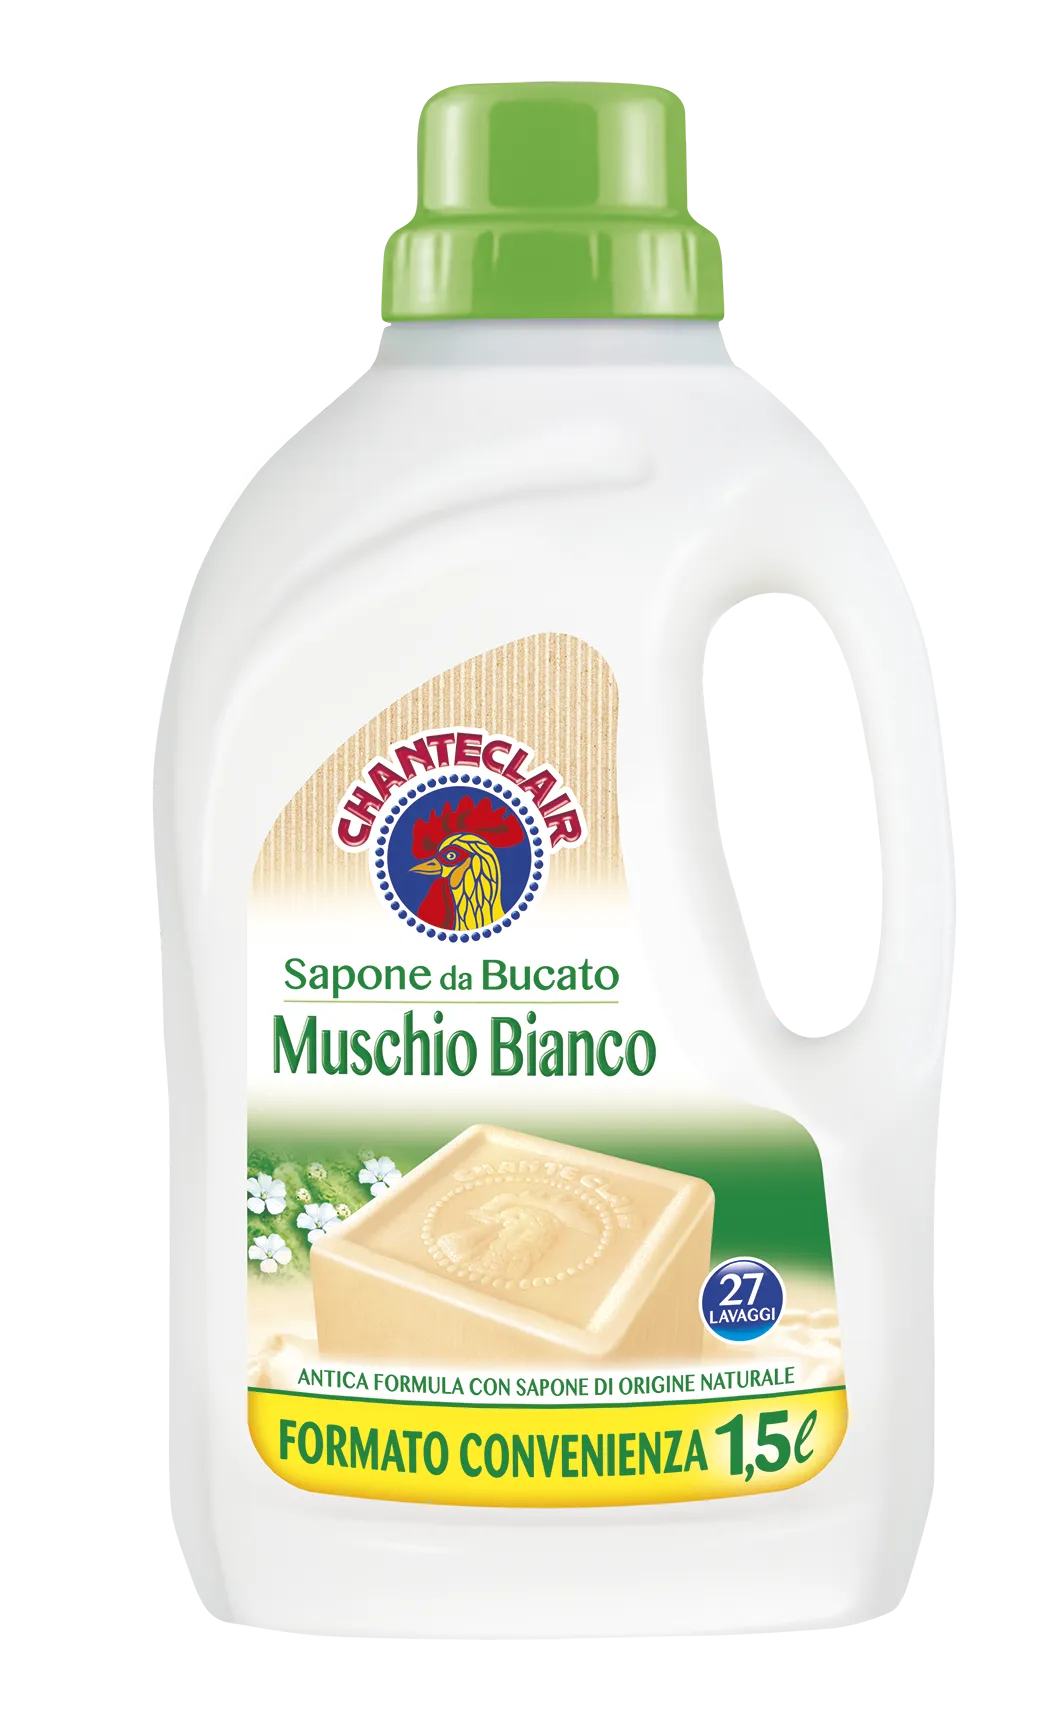 Chanteclair pracie mydlo Muschio Bianco 27P